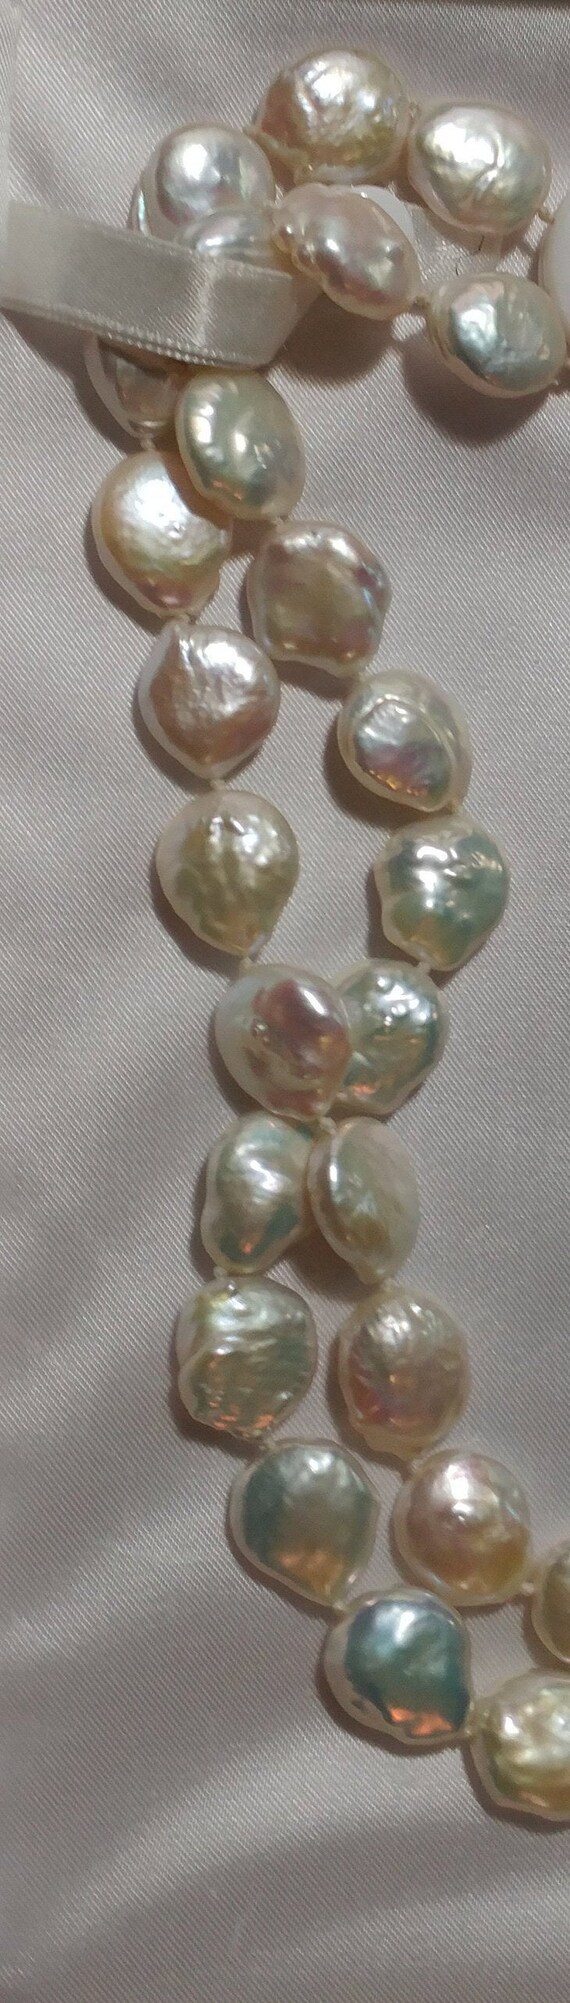 Flat faux Pearl necklace set - image 8